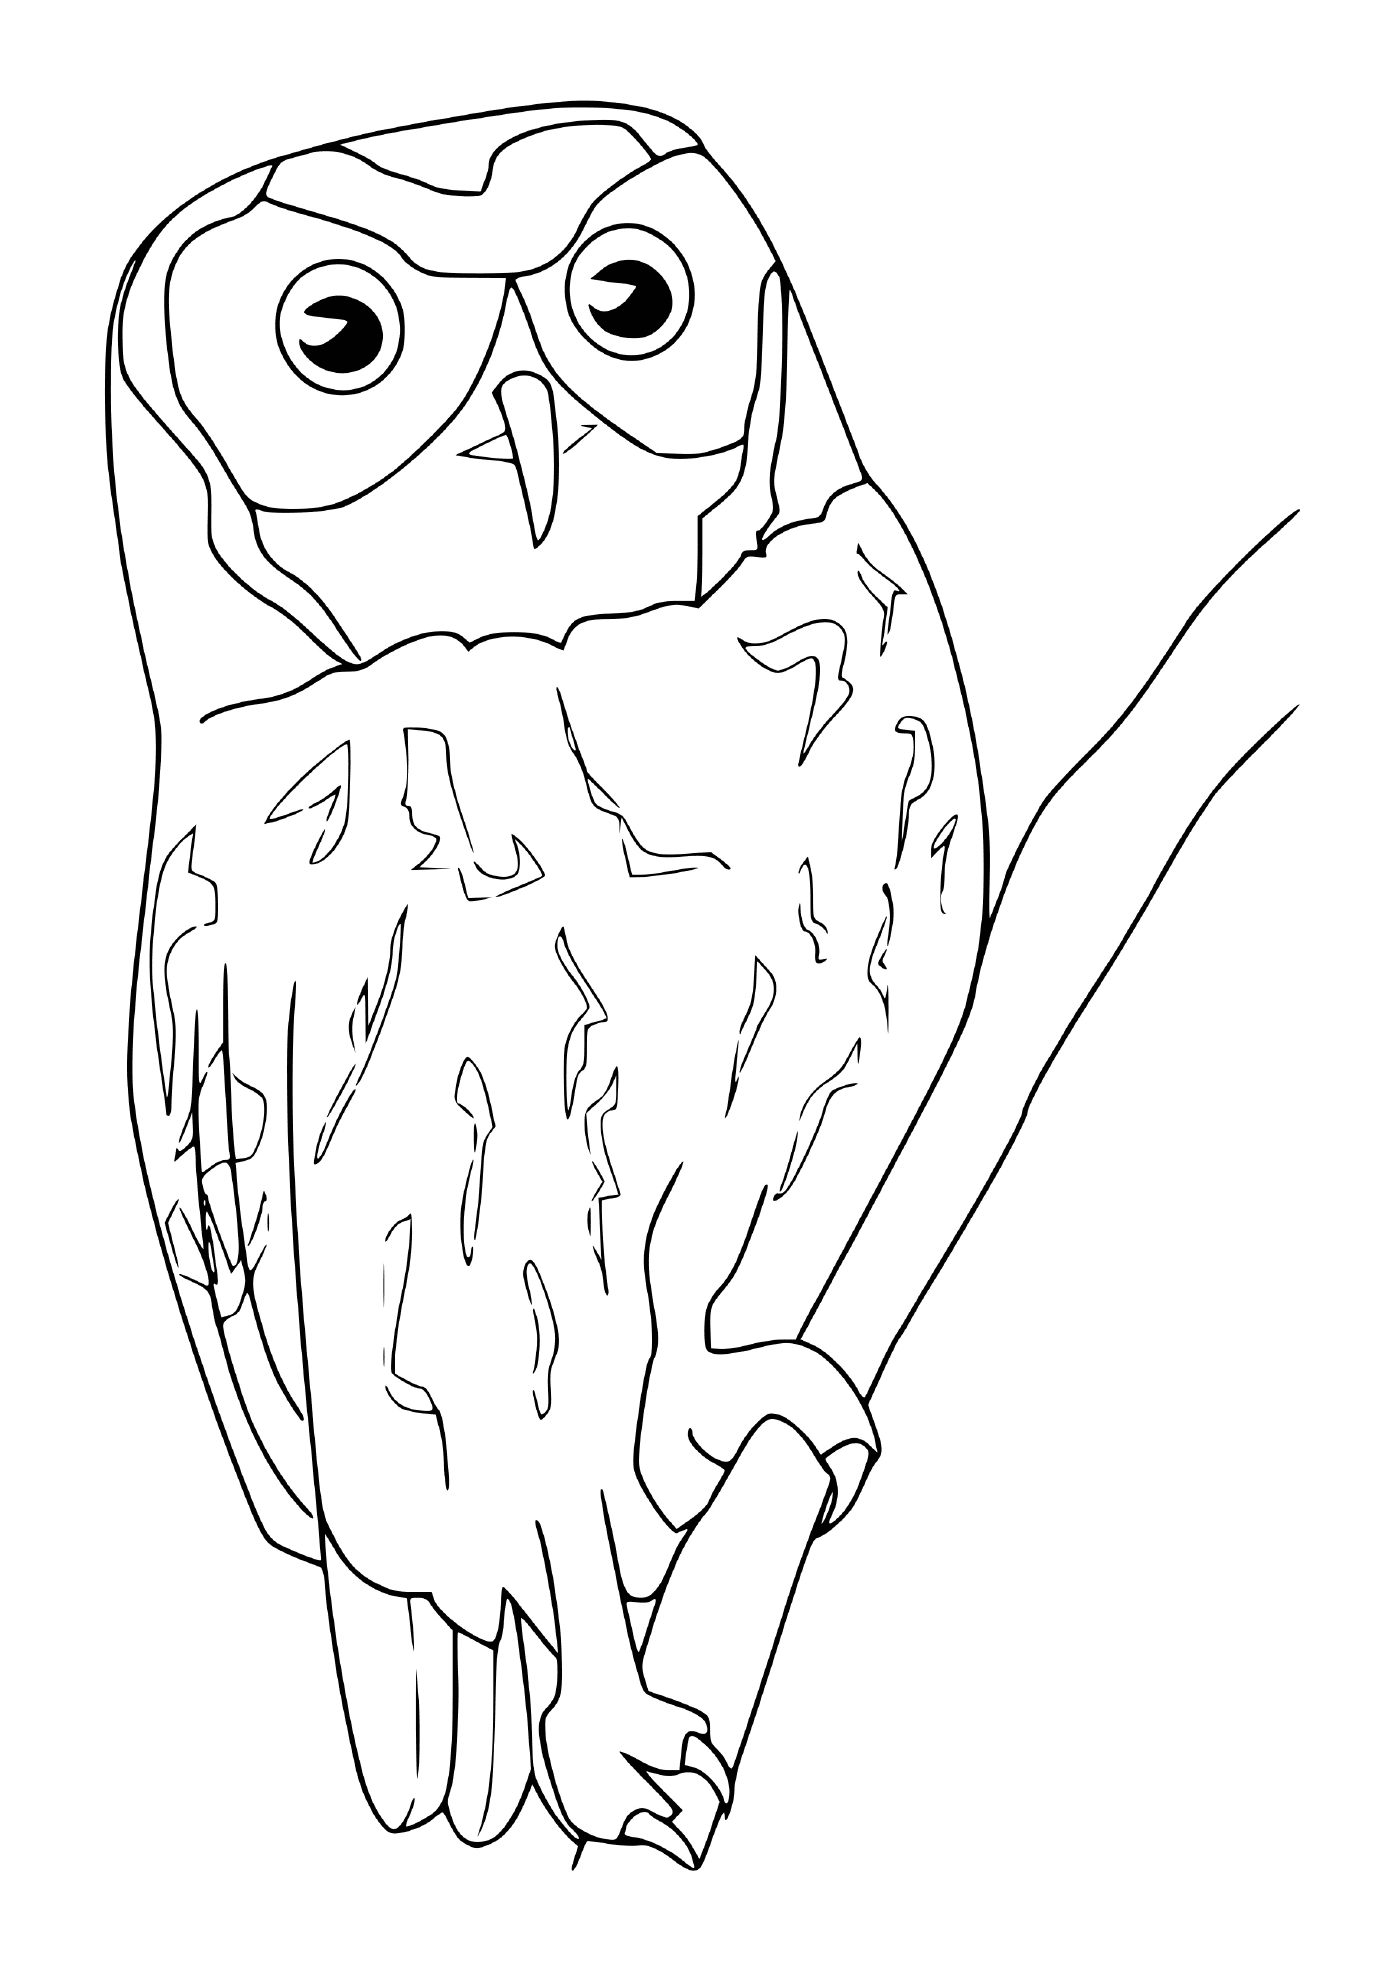  owl 